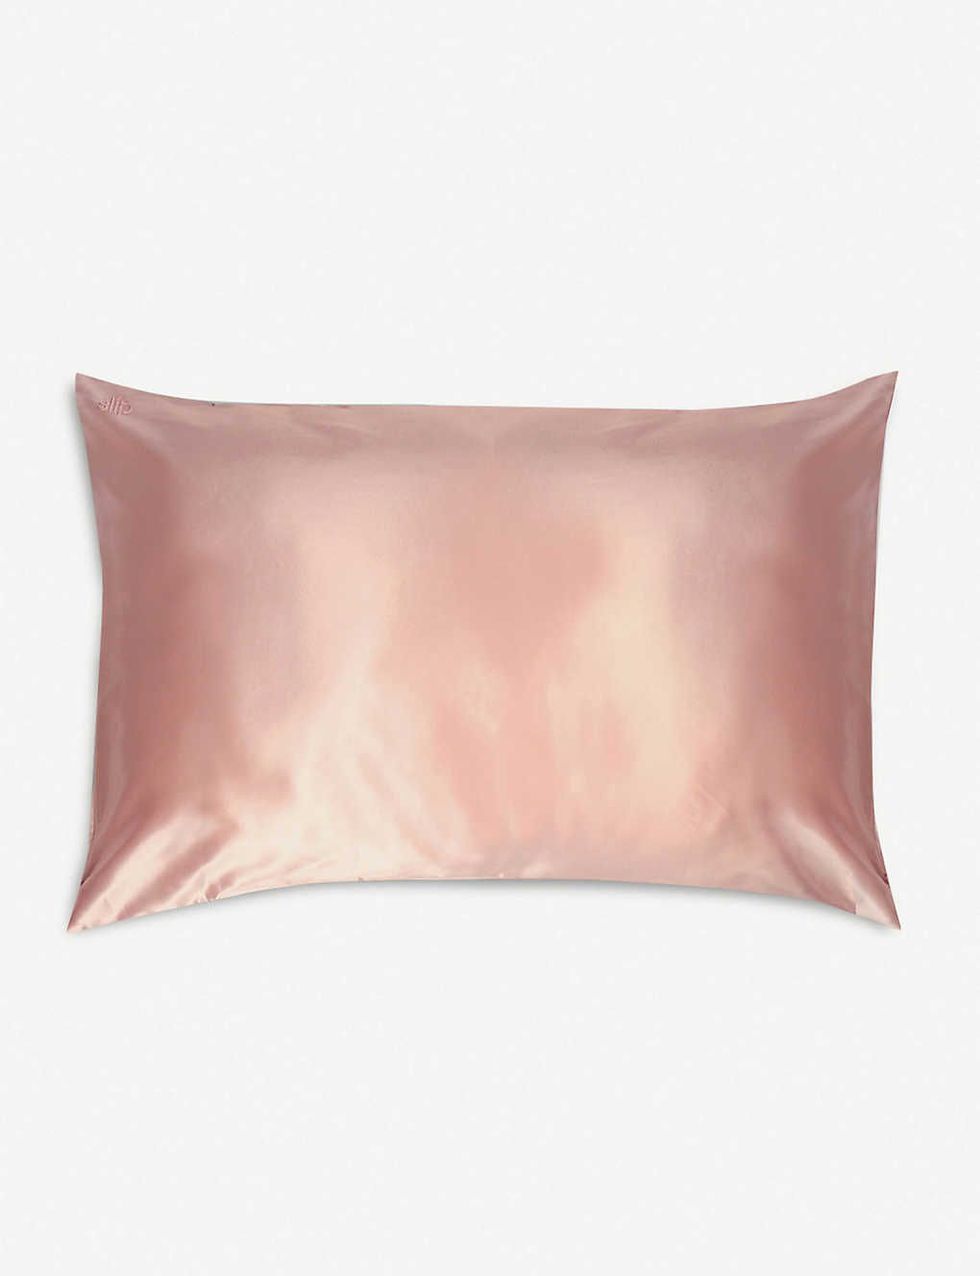 SLIP 粉色真絲枕套，NT. 2,800